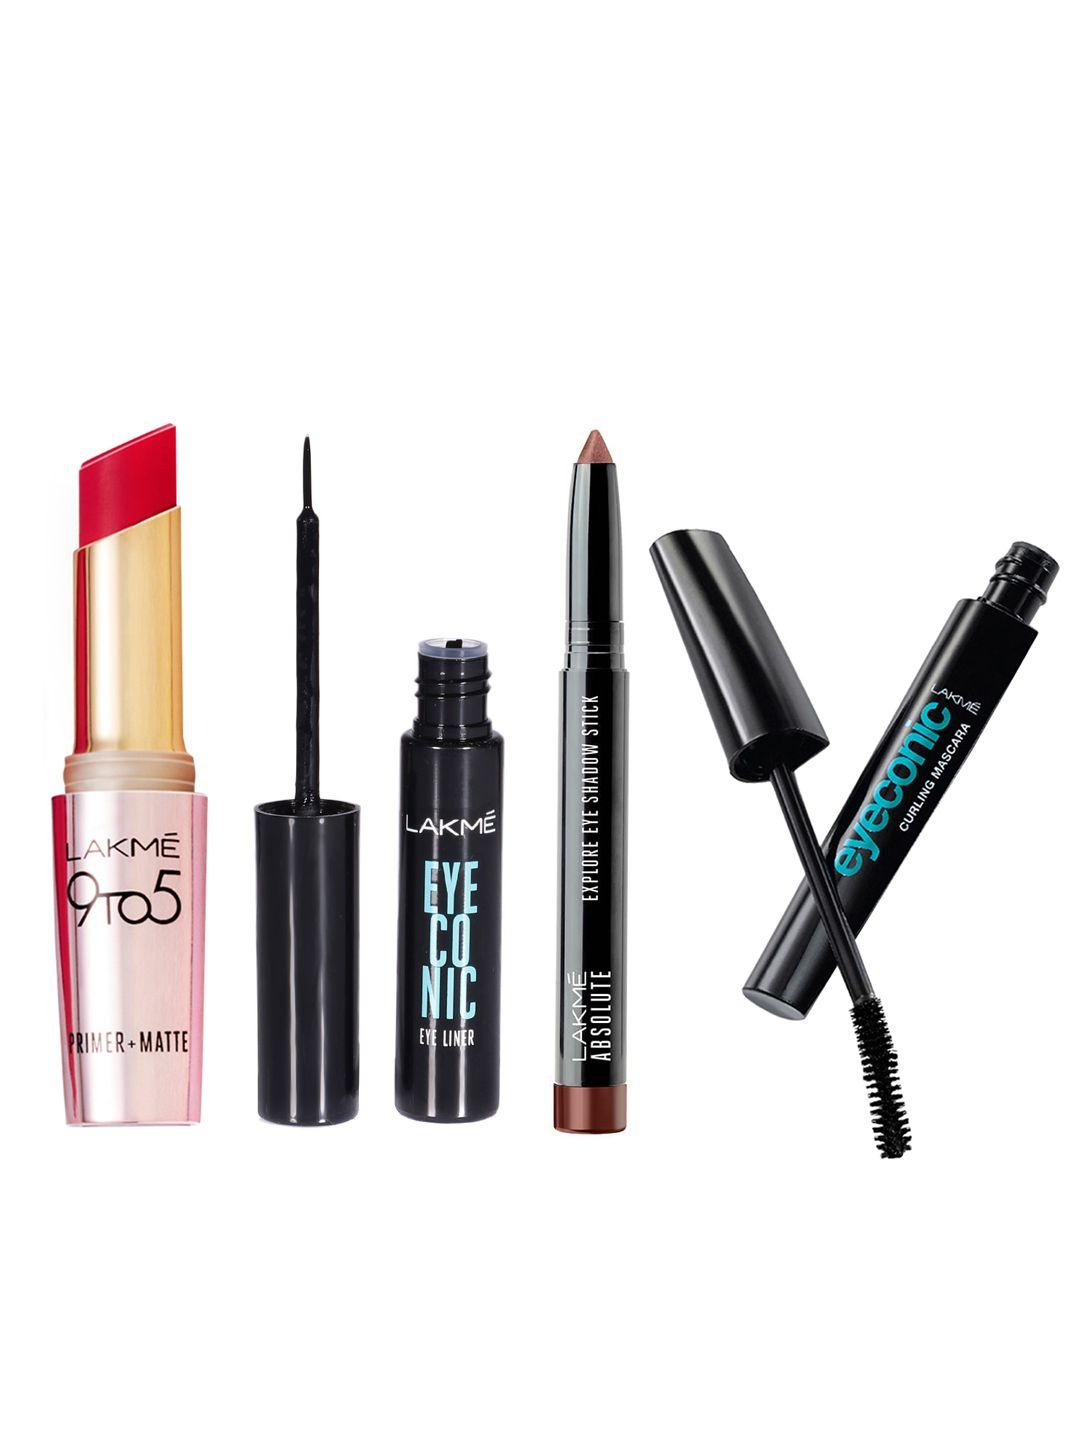 lakme eyeconic mascara + eyeshadow stick + liquid eyeliner + 9to5 primer+matte lipstick